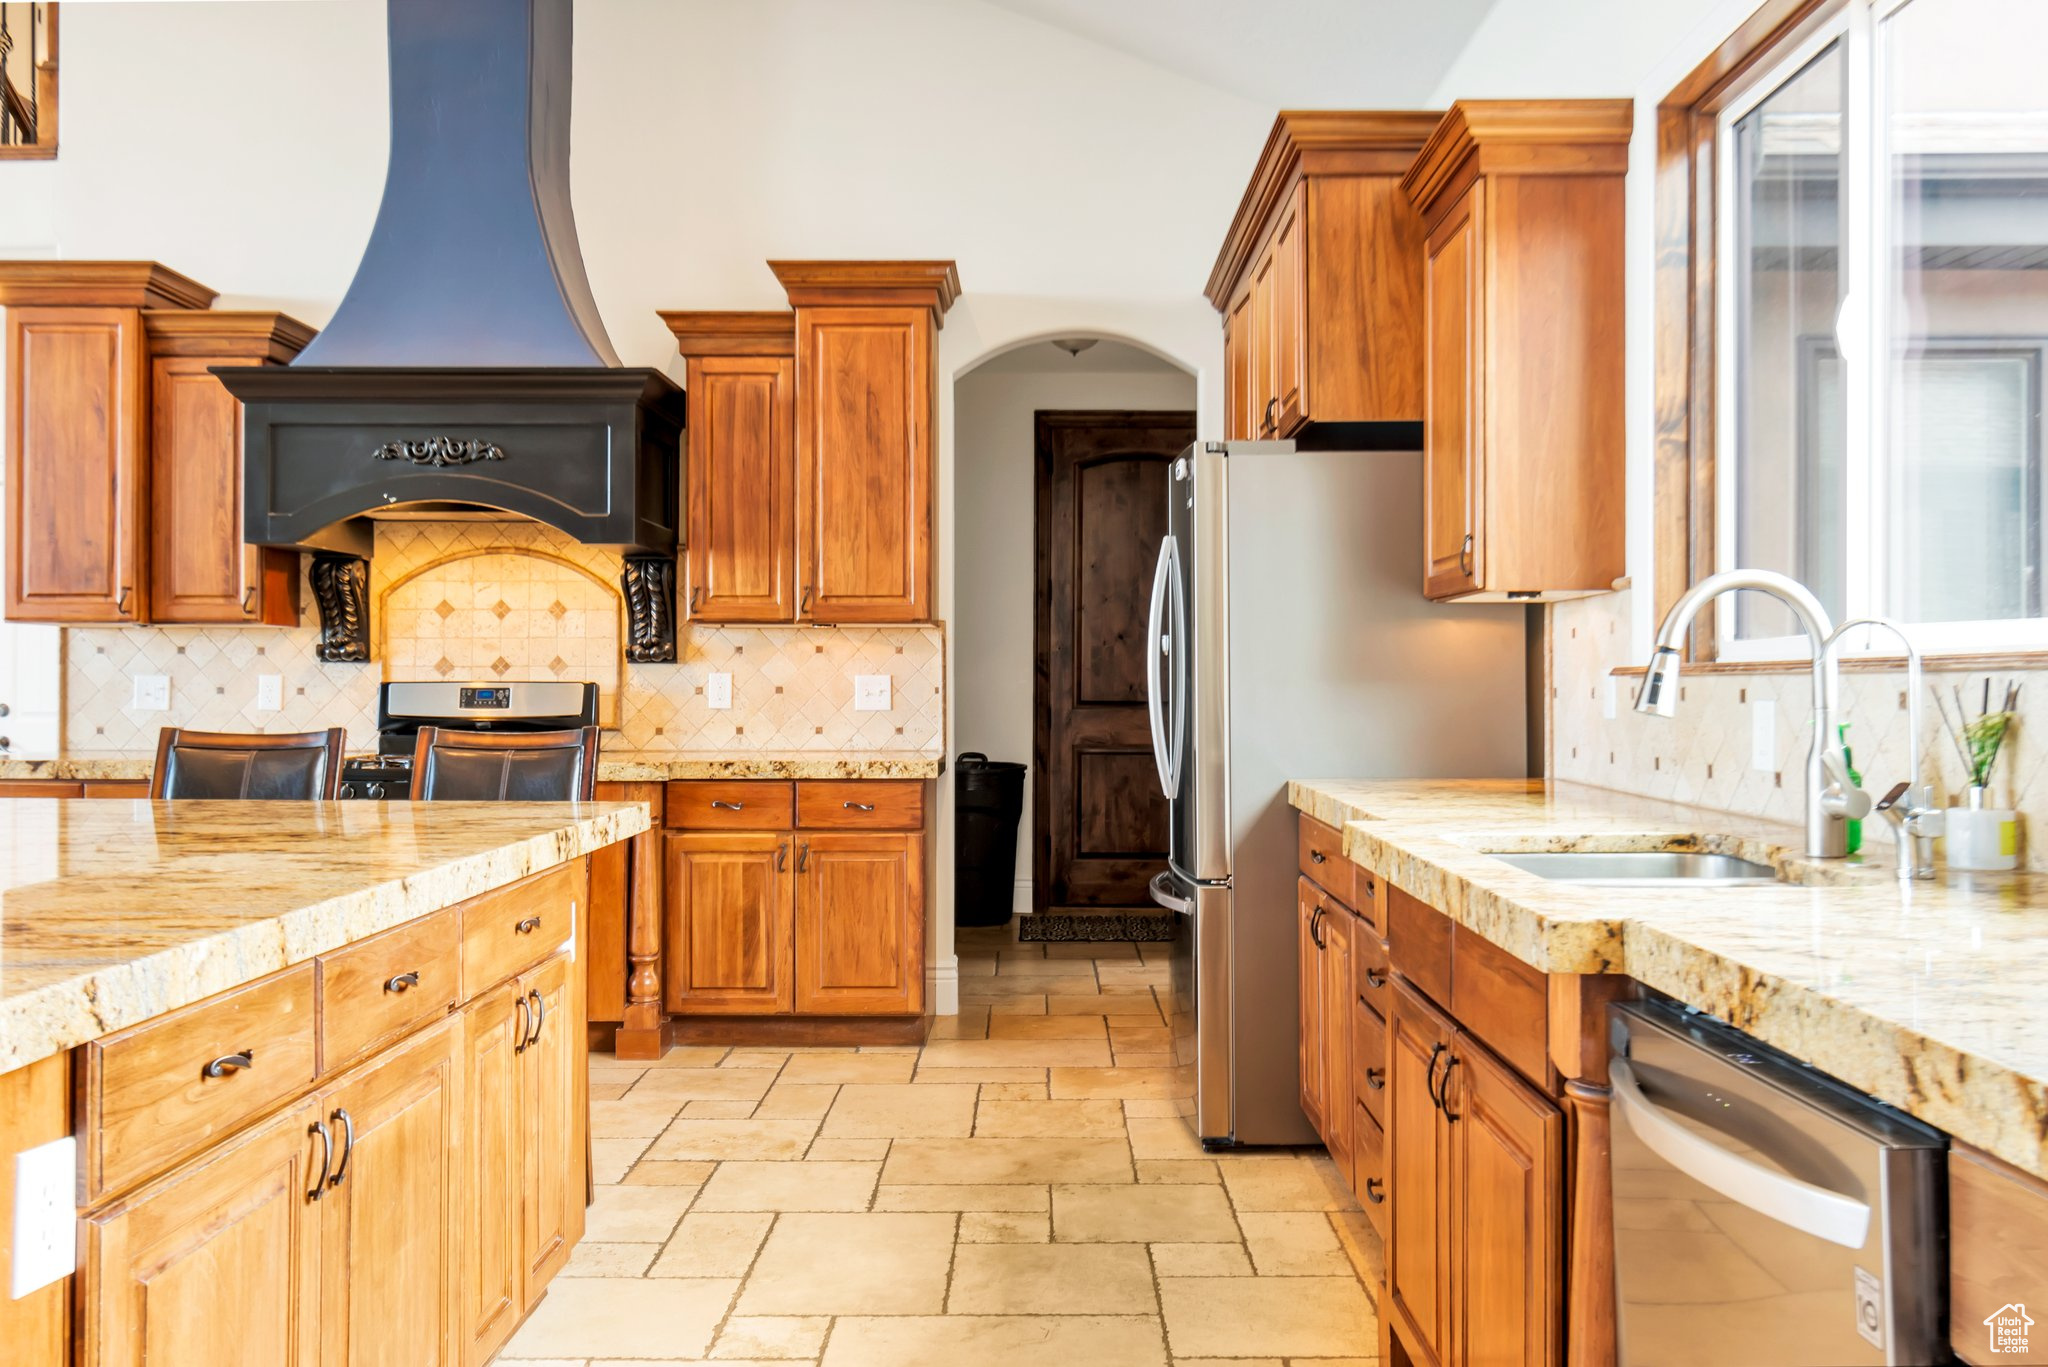 Kitchen featuring premium range hood, range, backsplash, light tile floors, and stainless steel dishwasher